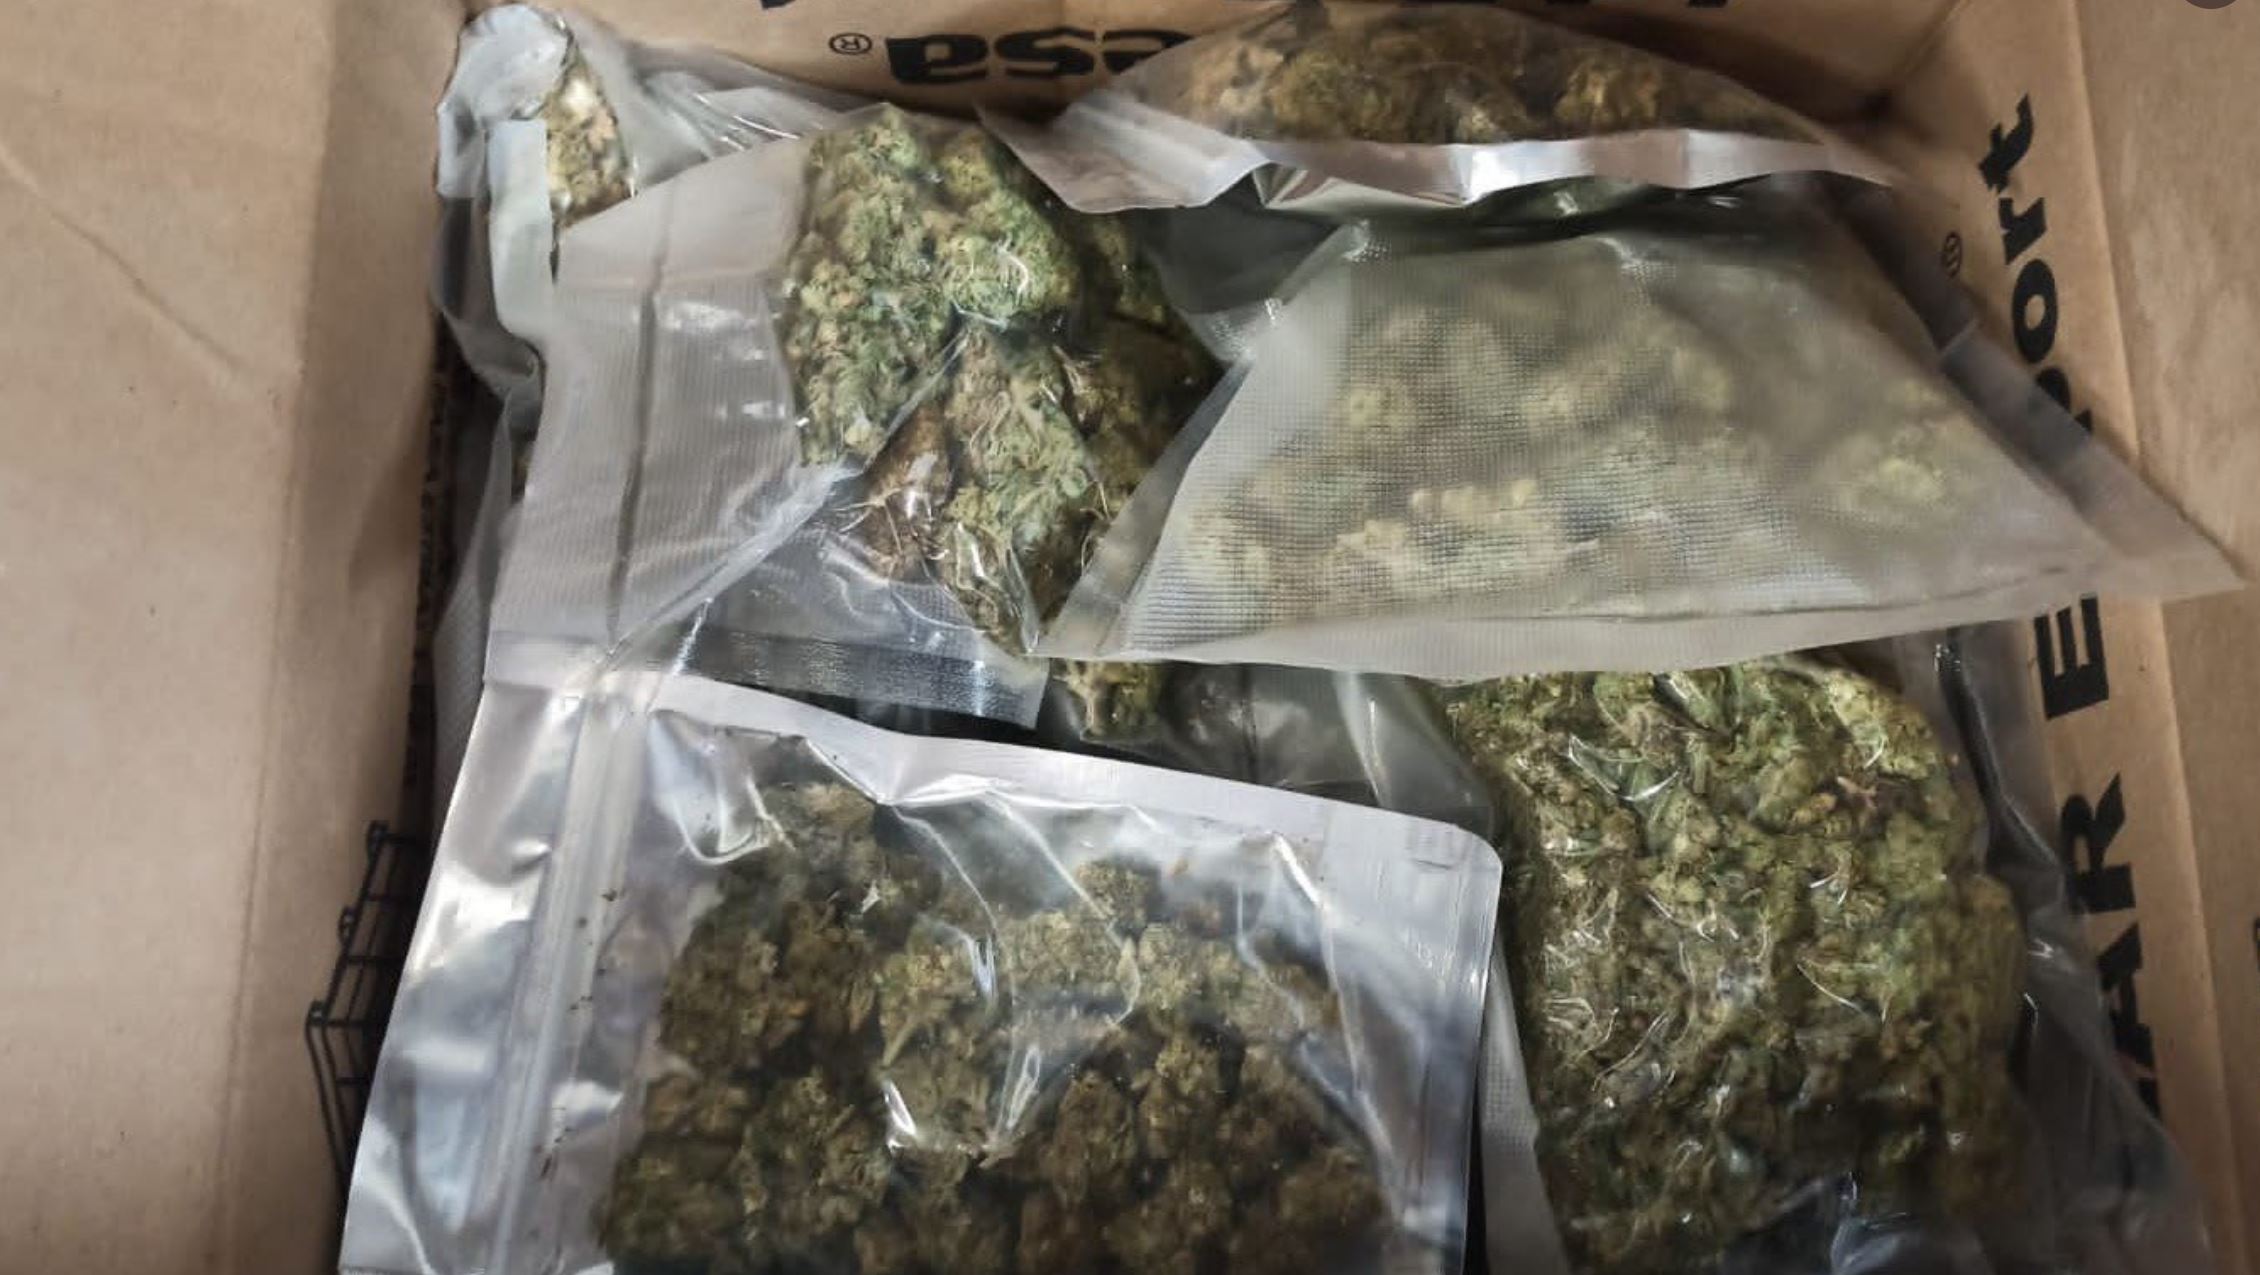 Canine binomials intercepted 10 kilos of marijuana at parcel companies located in six states - Infobae